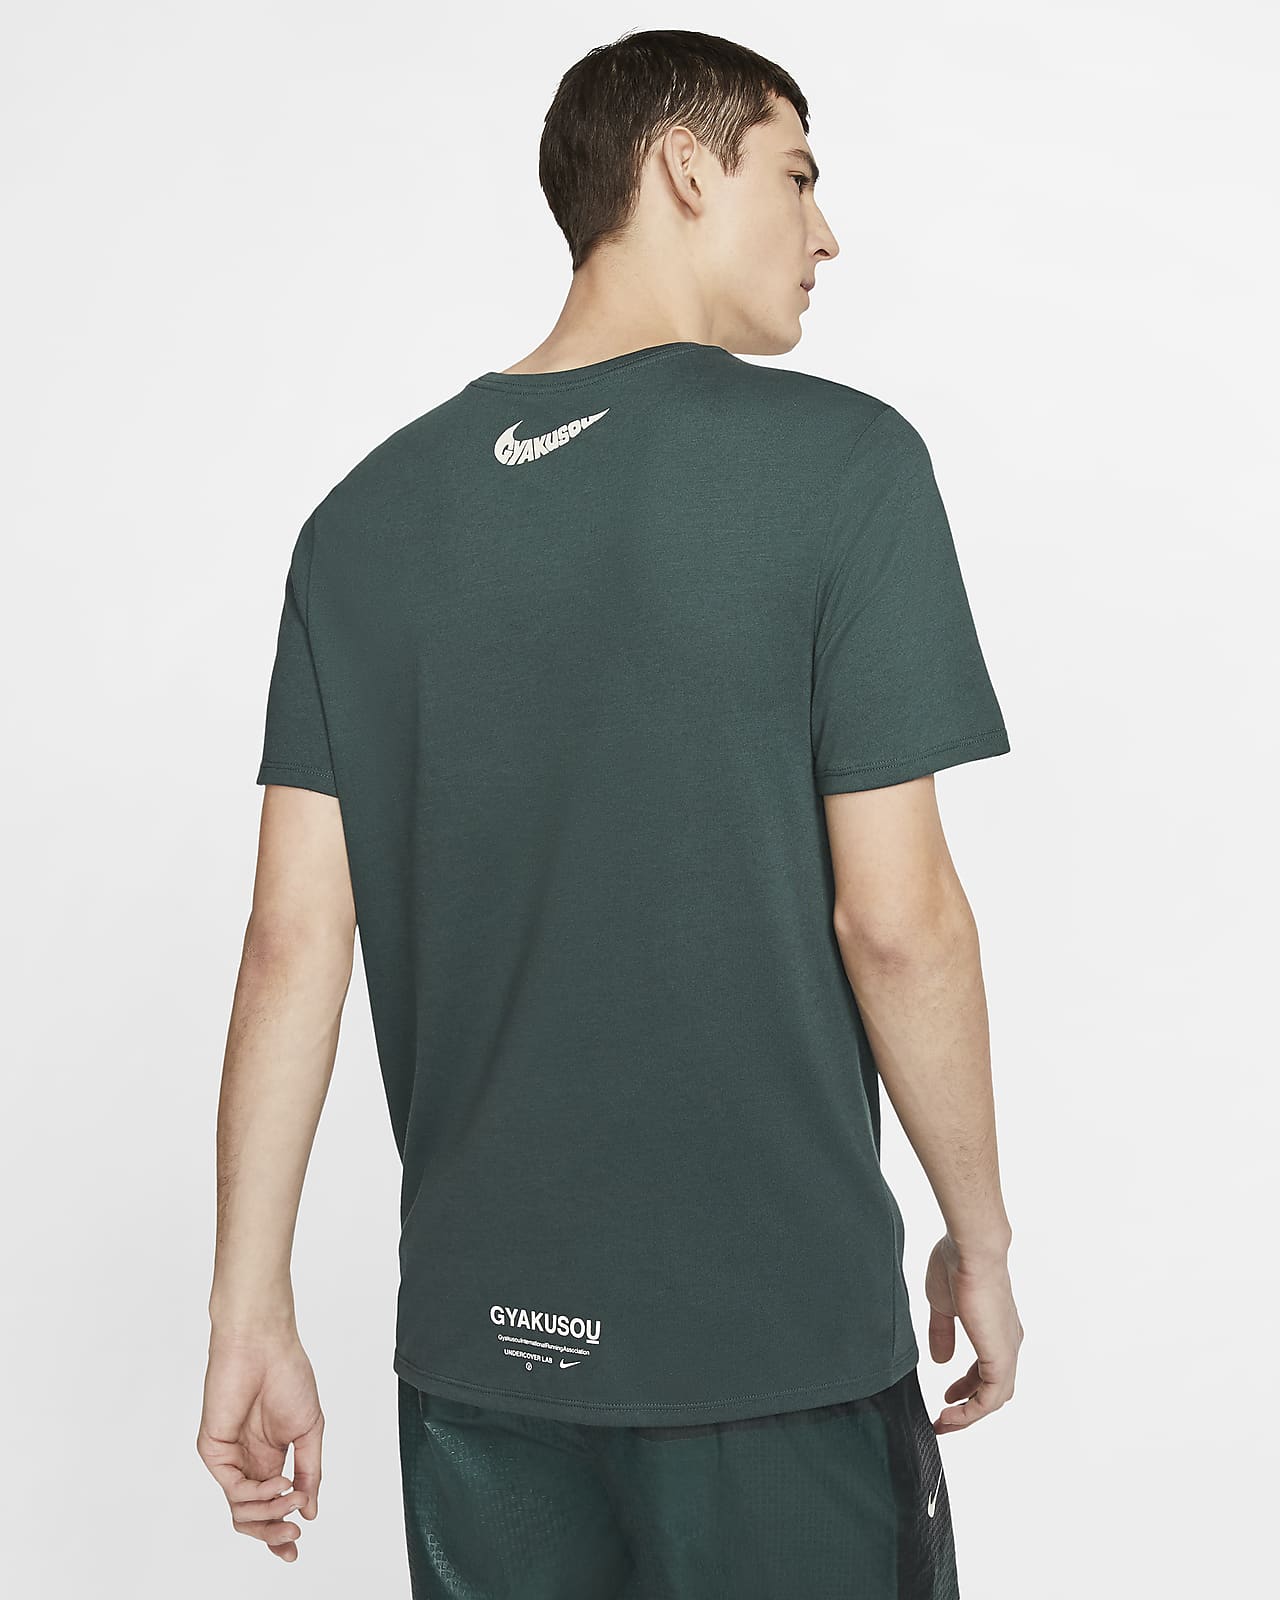 Nike公式 ナイキ X Gyakusou メンズ ランニング Tシャツ オンラインストア 通販サイト